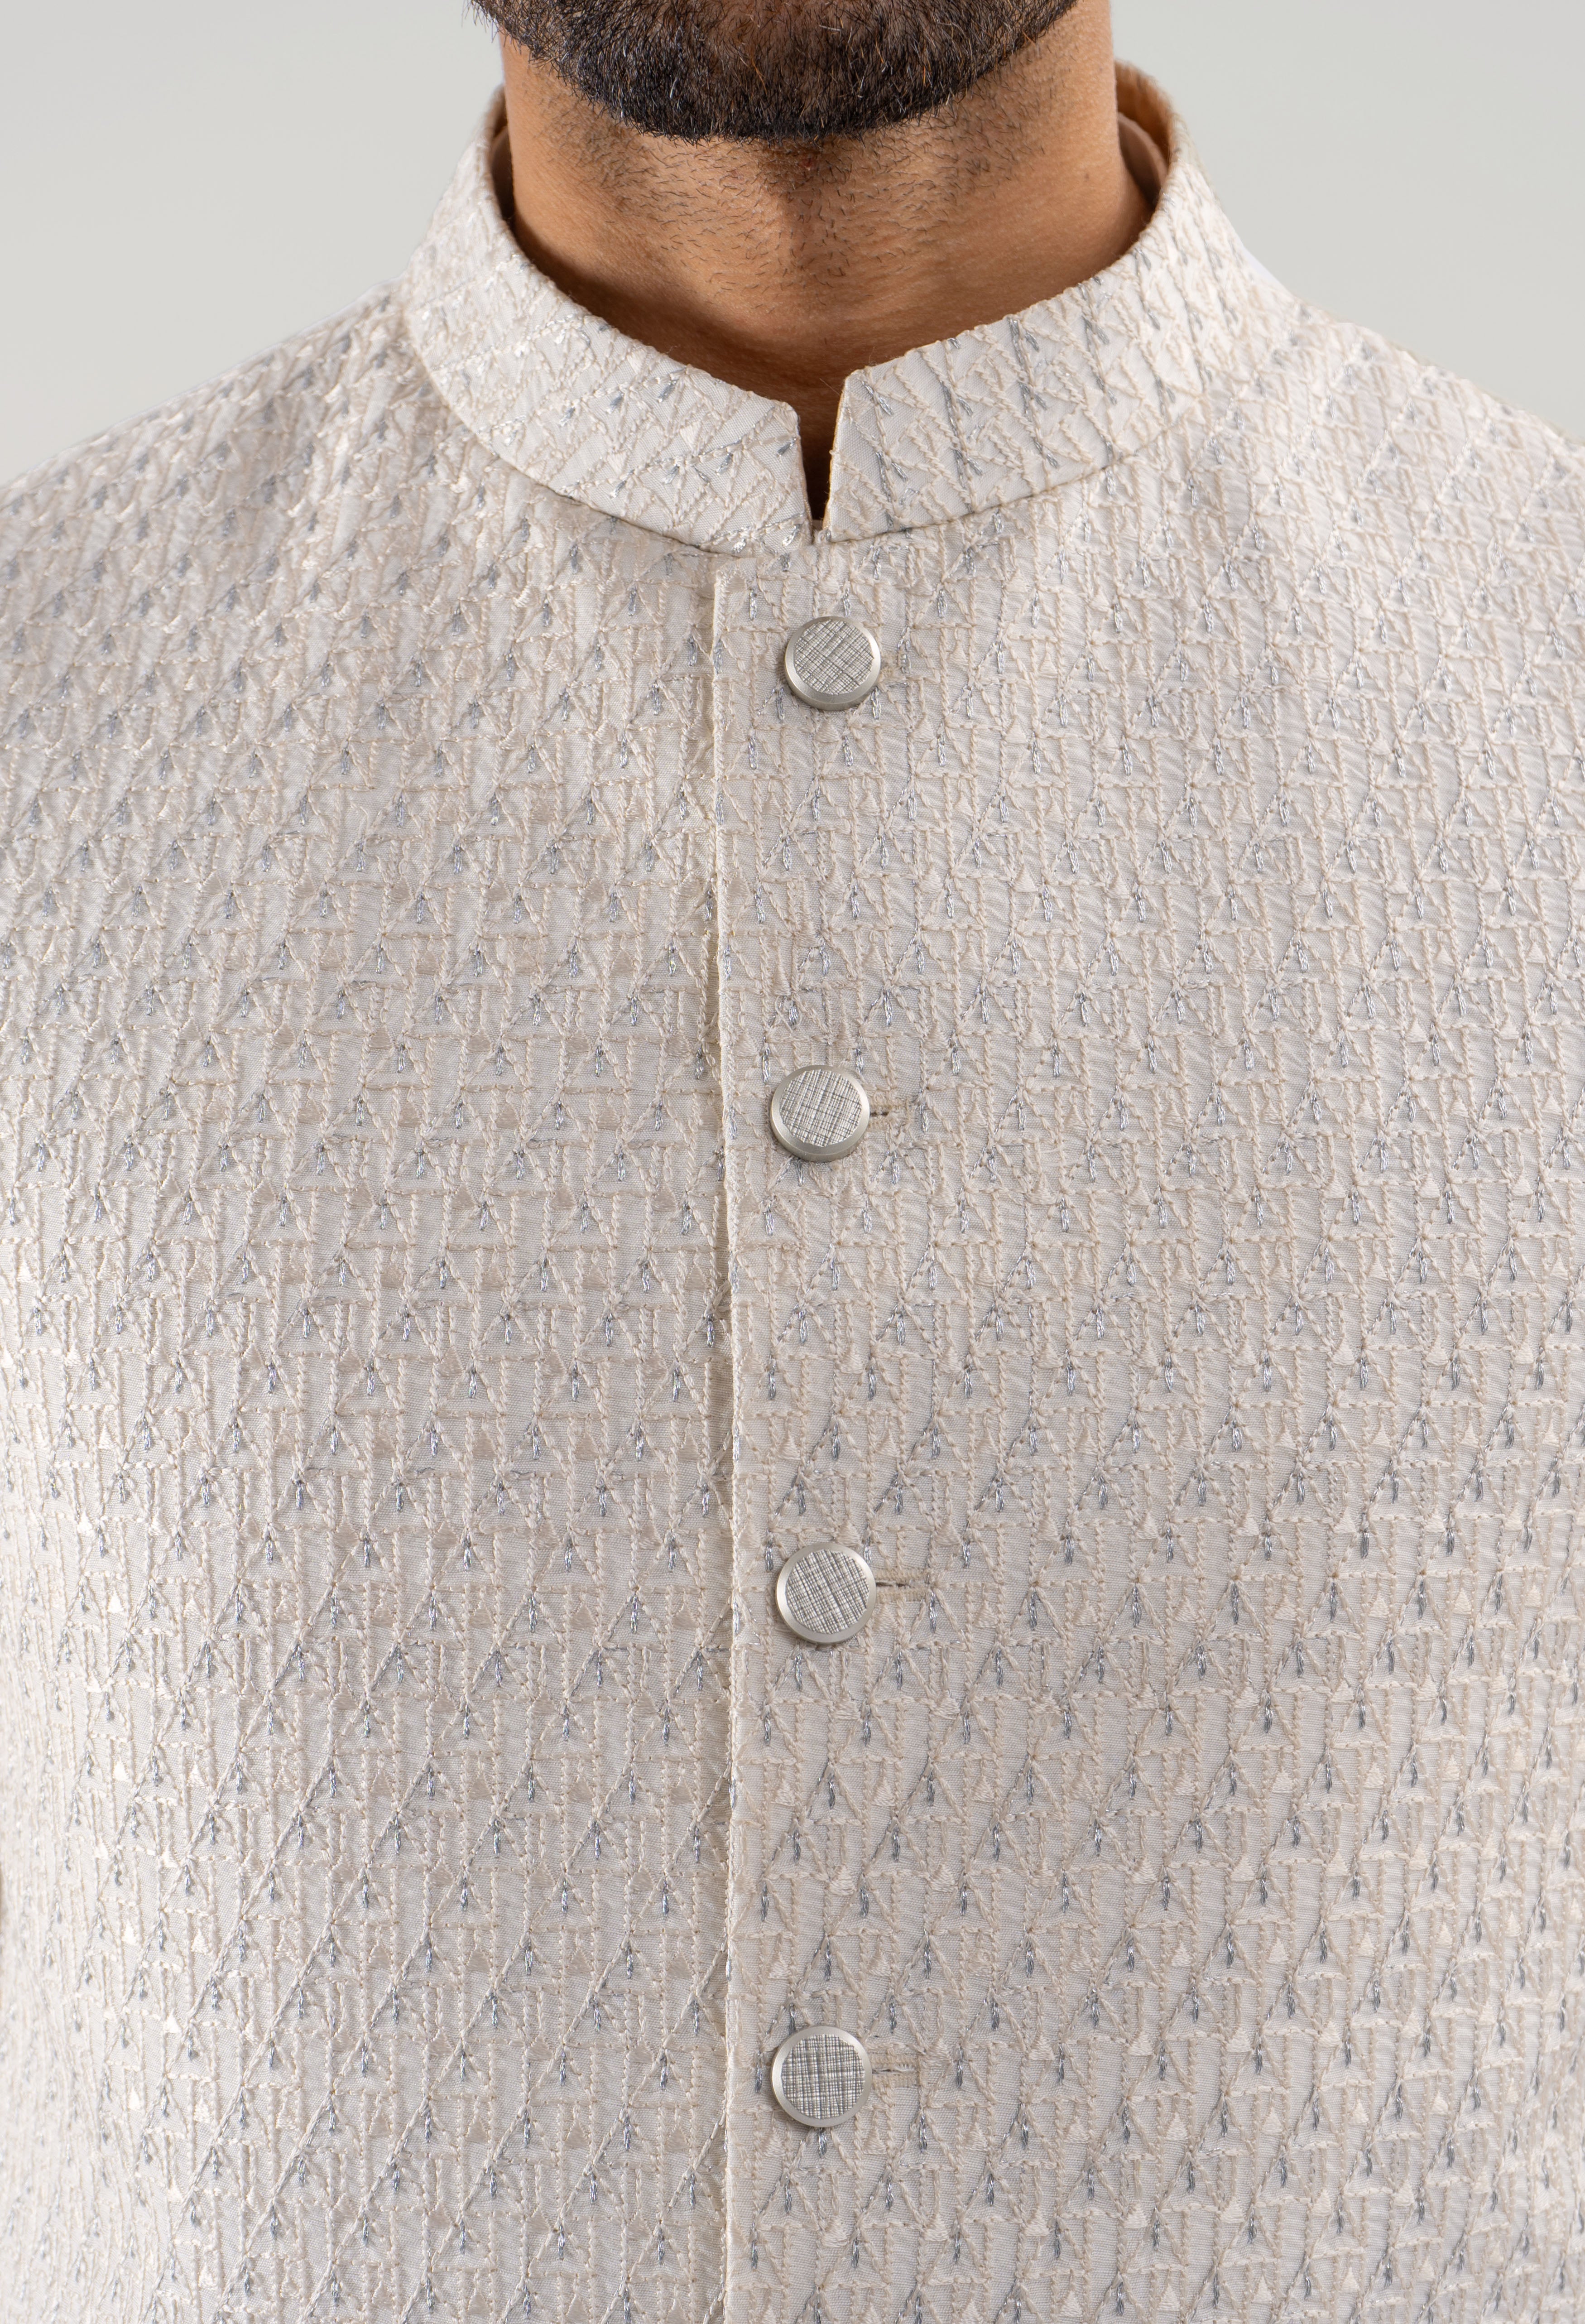 Off-White Embroidered Waistcoat (V/C-000179)